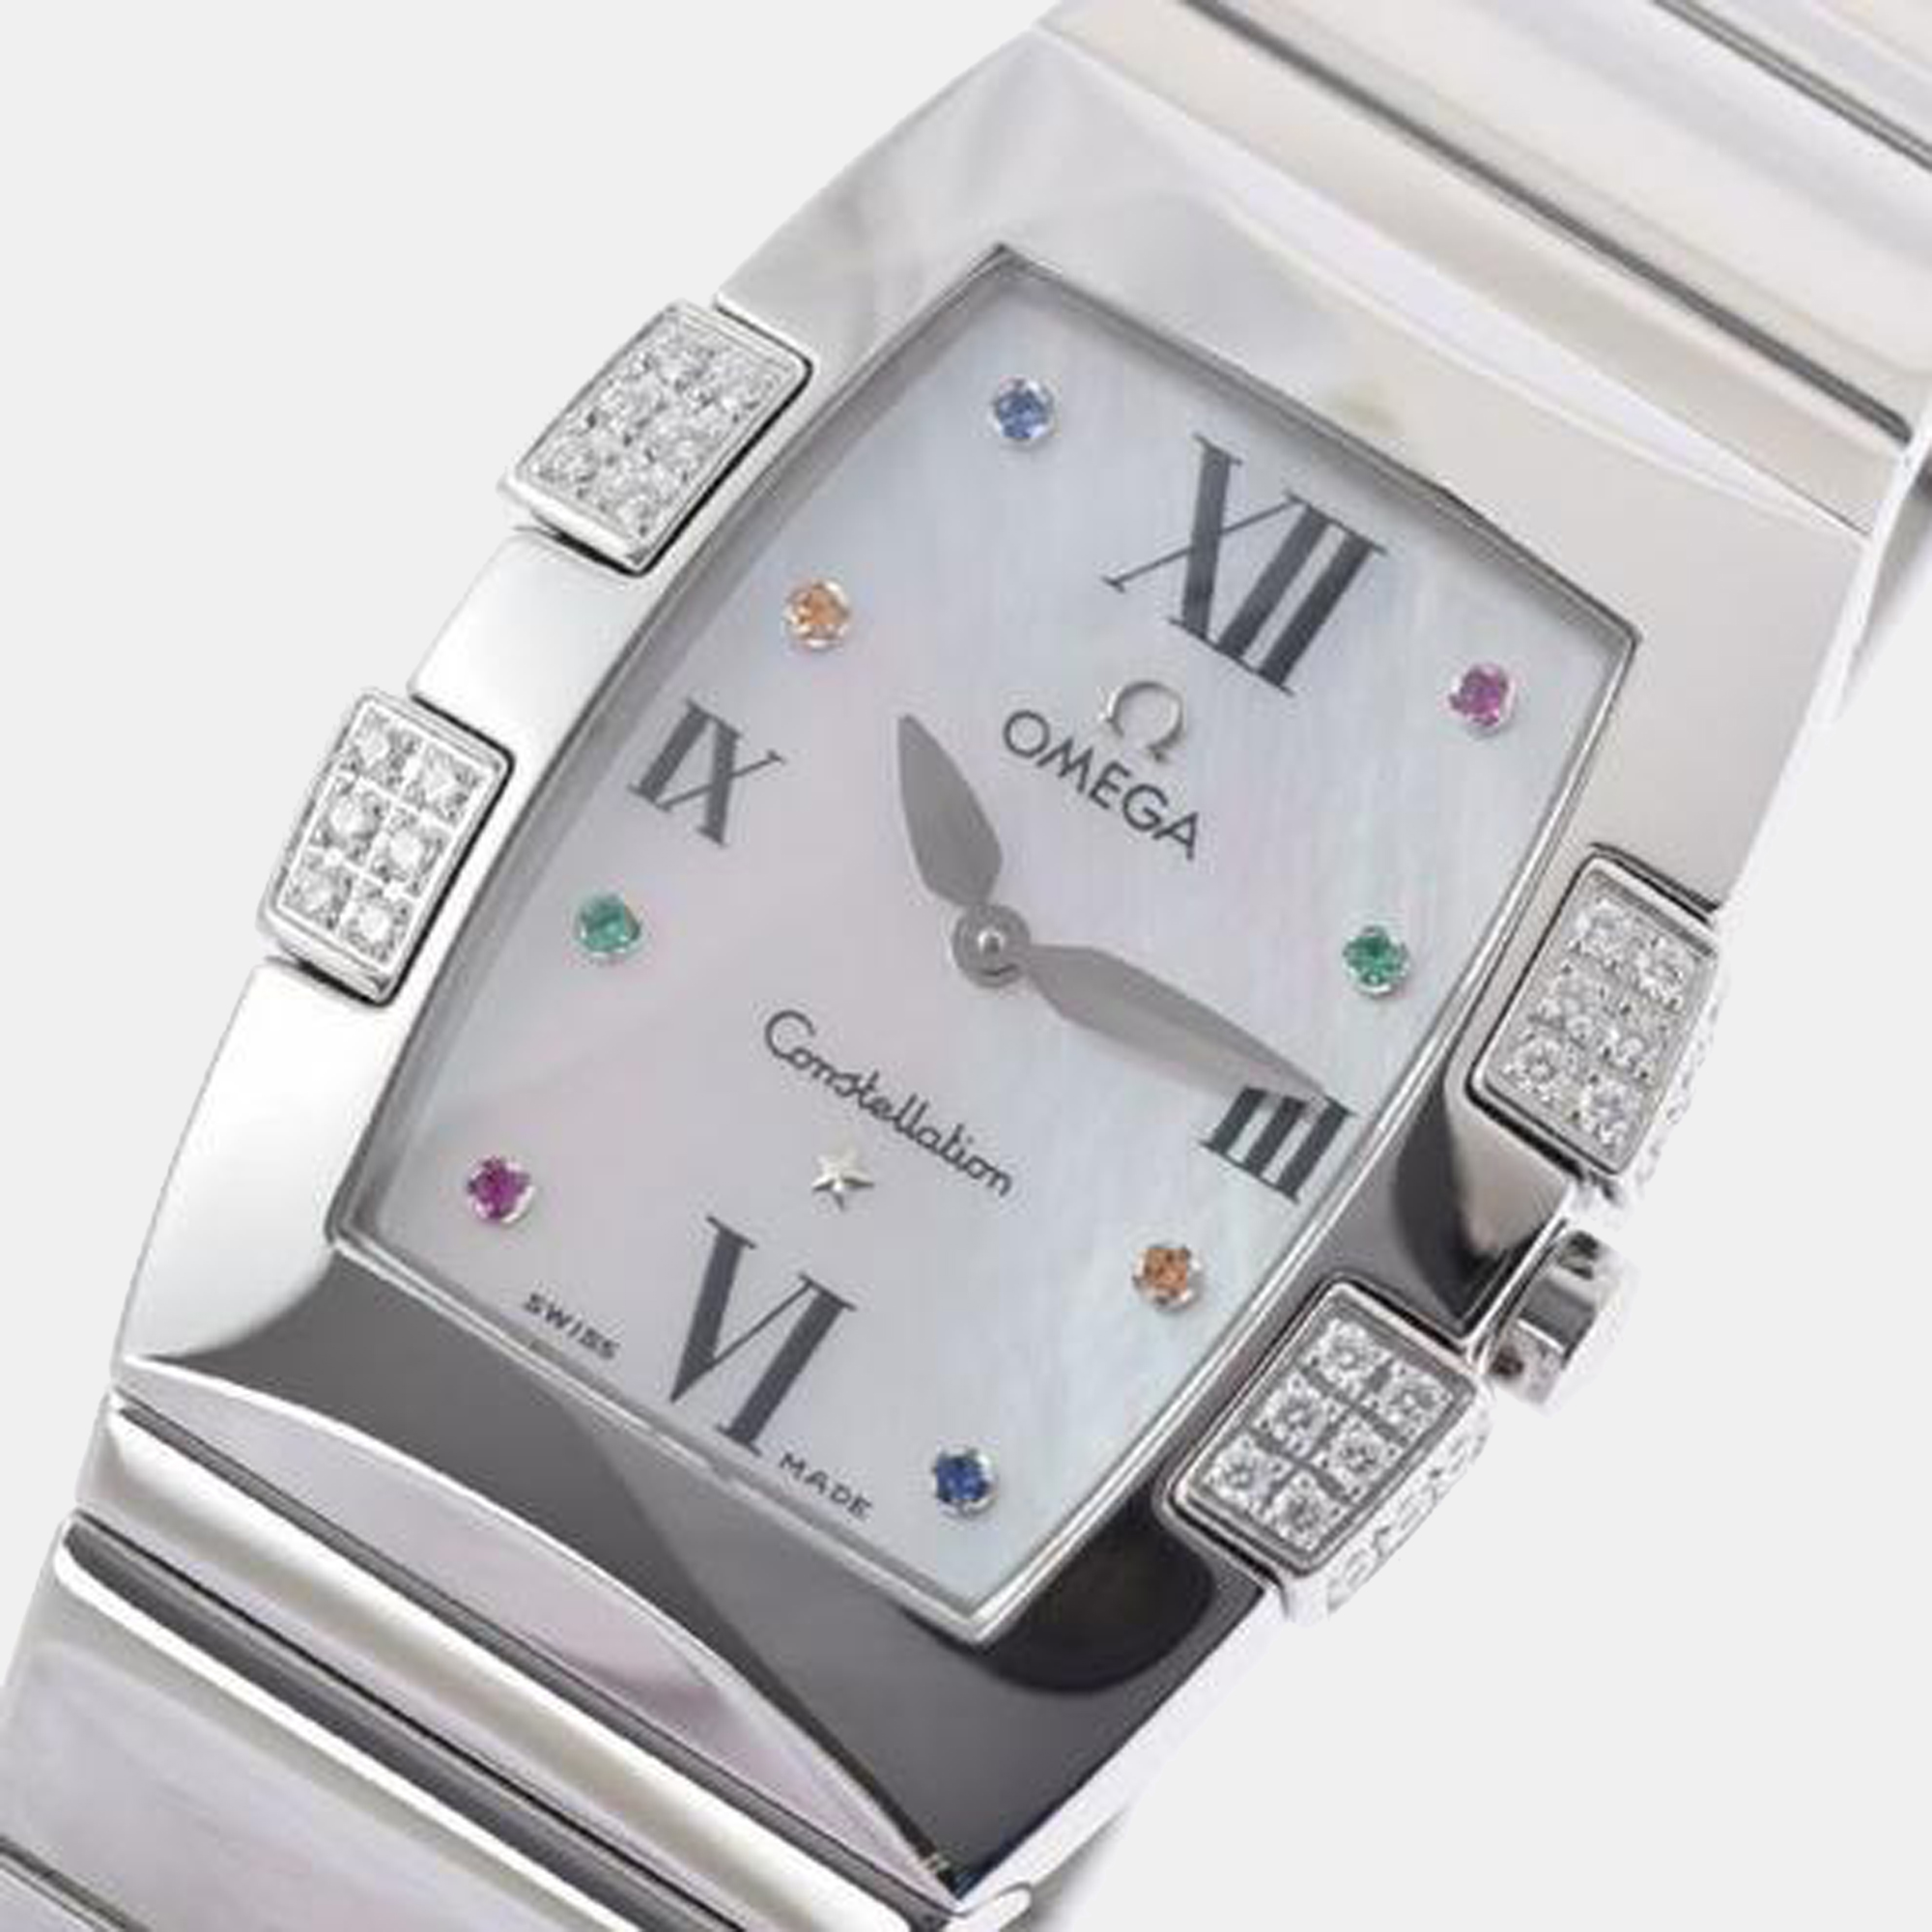 

Omega White Shell Stainless Steel Constellation 1586.79 Quartz Women's Wristwatch 25 mm